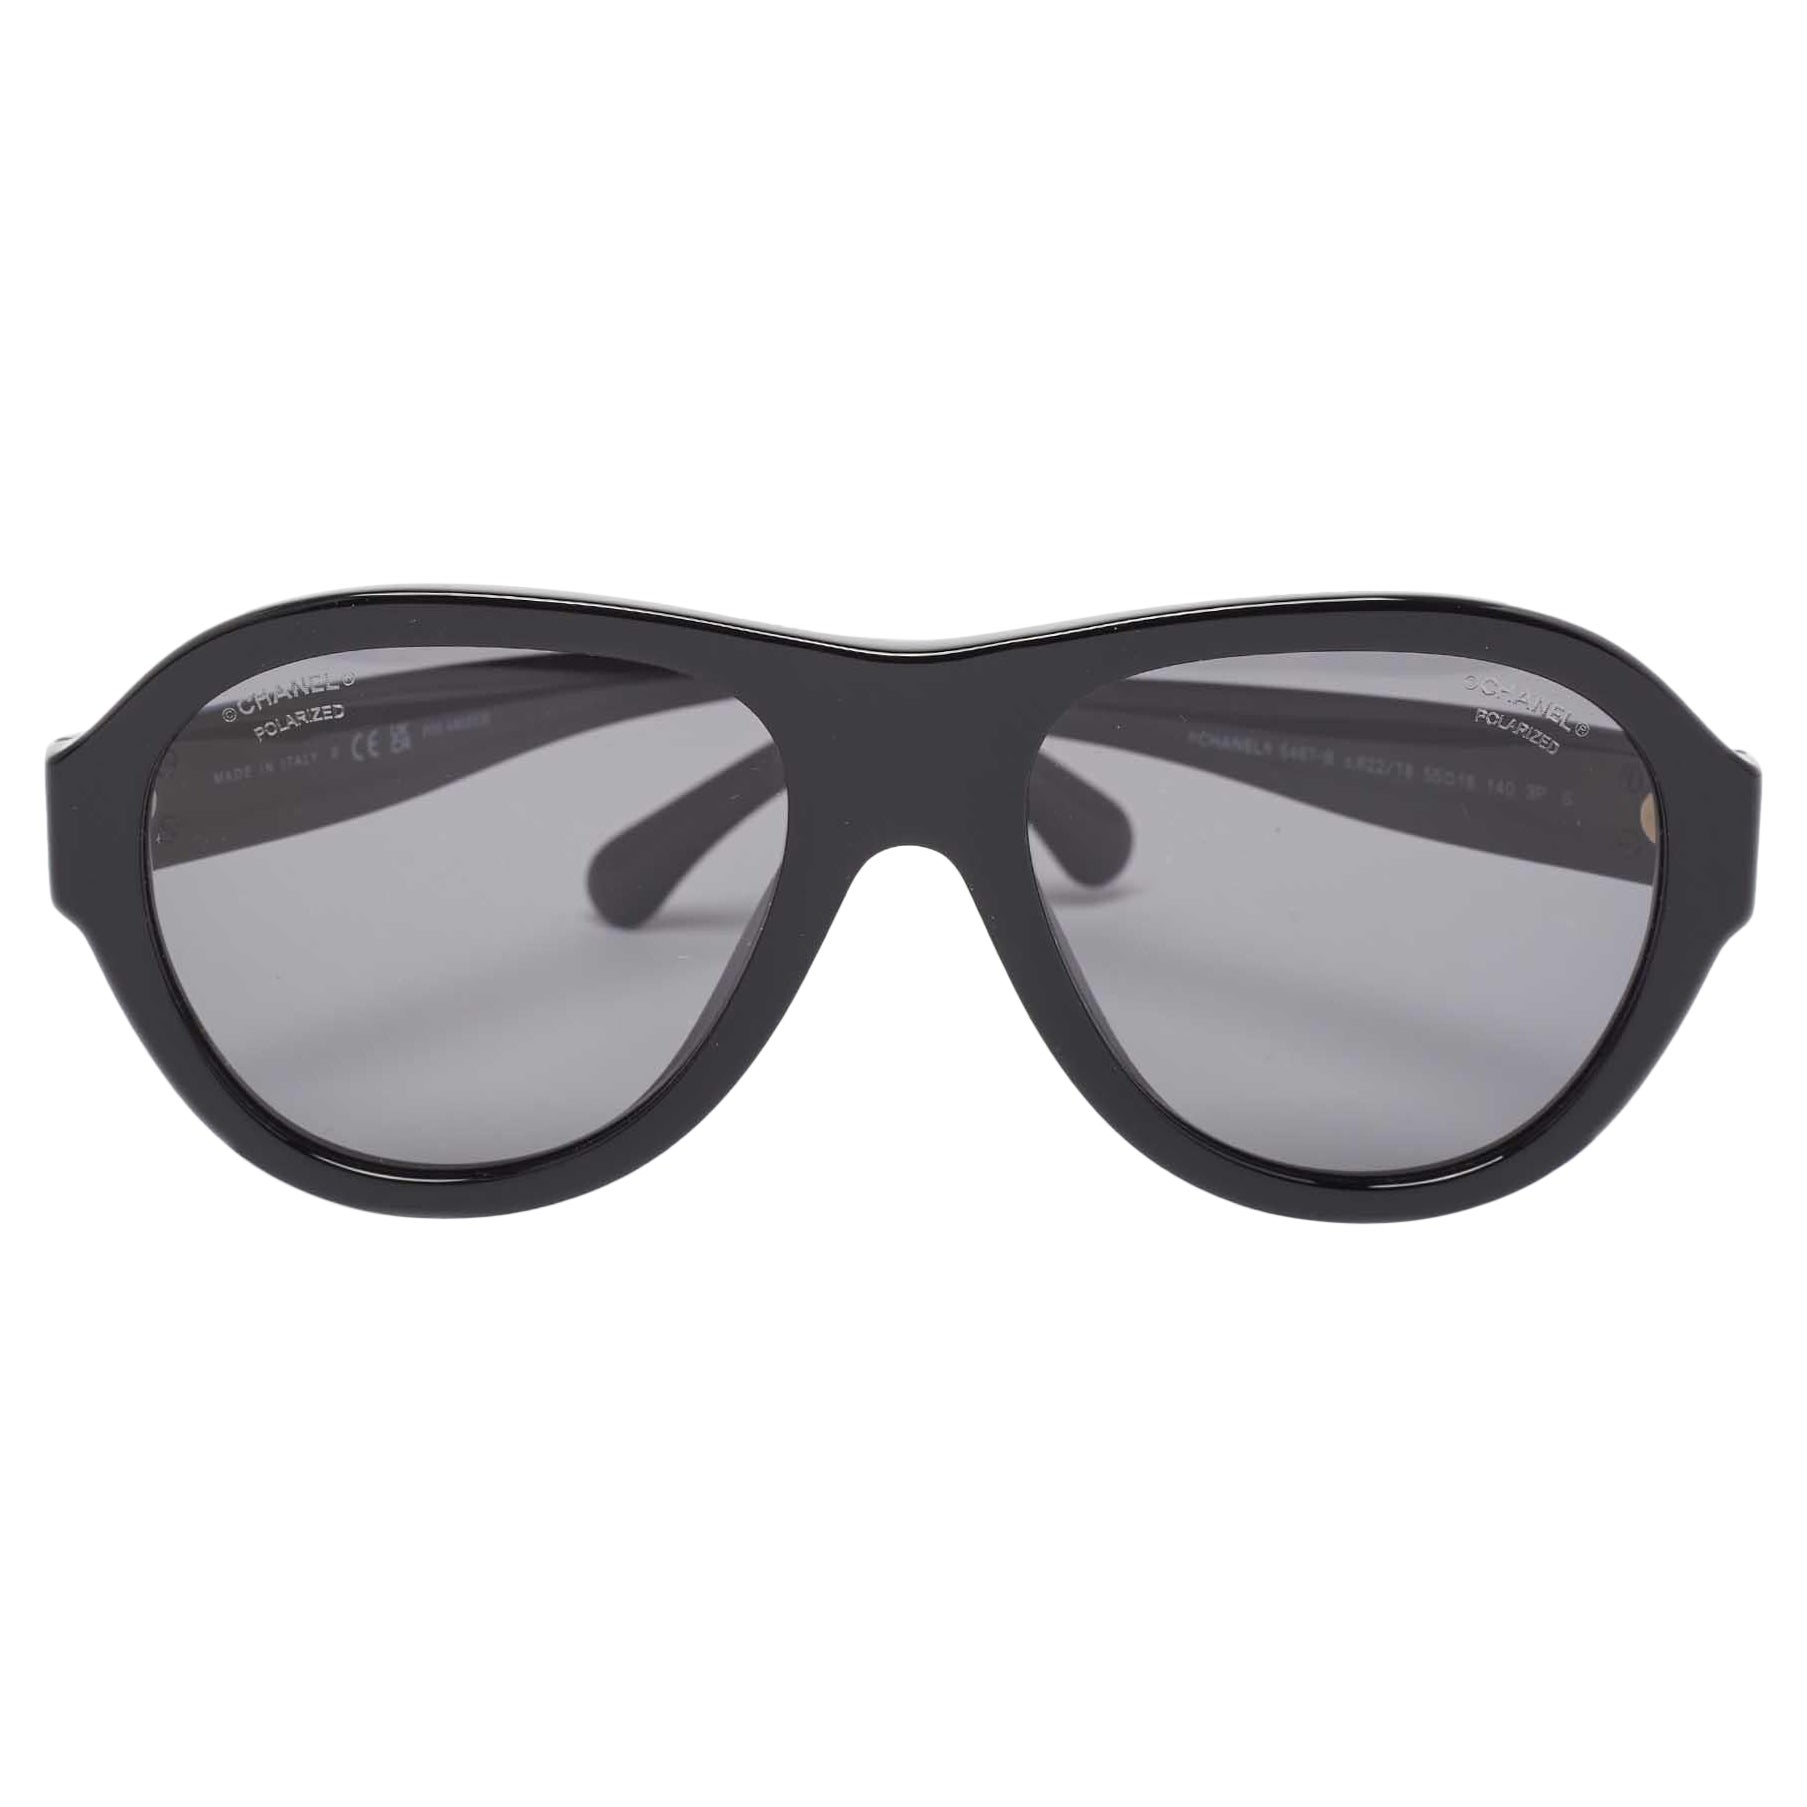 Does Chanel make men’s sunglasses?